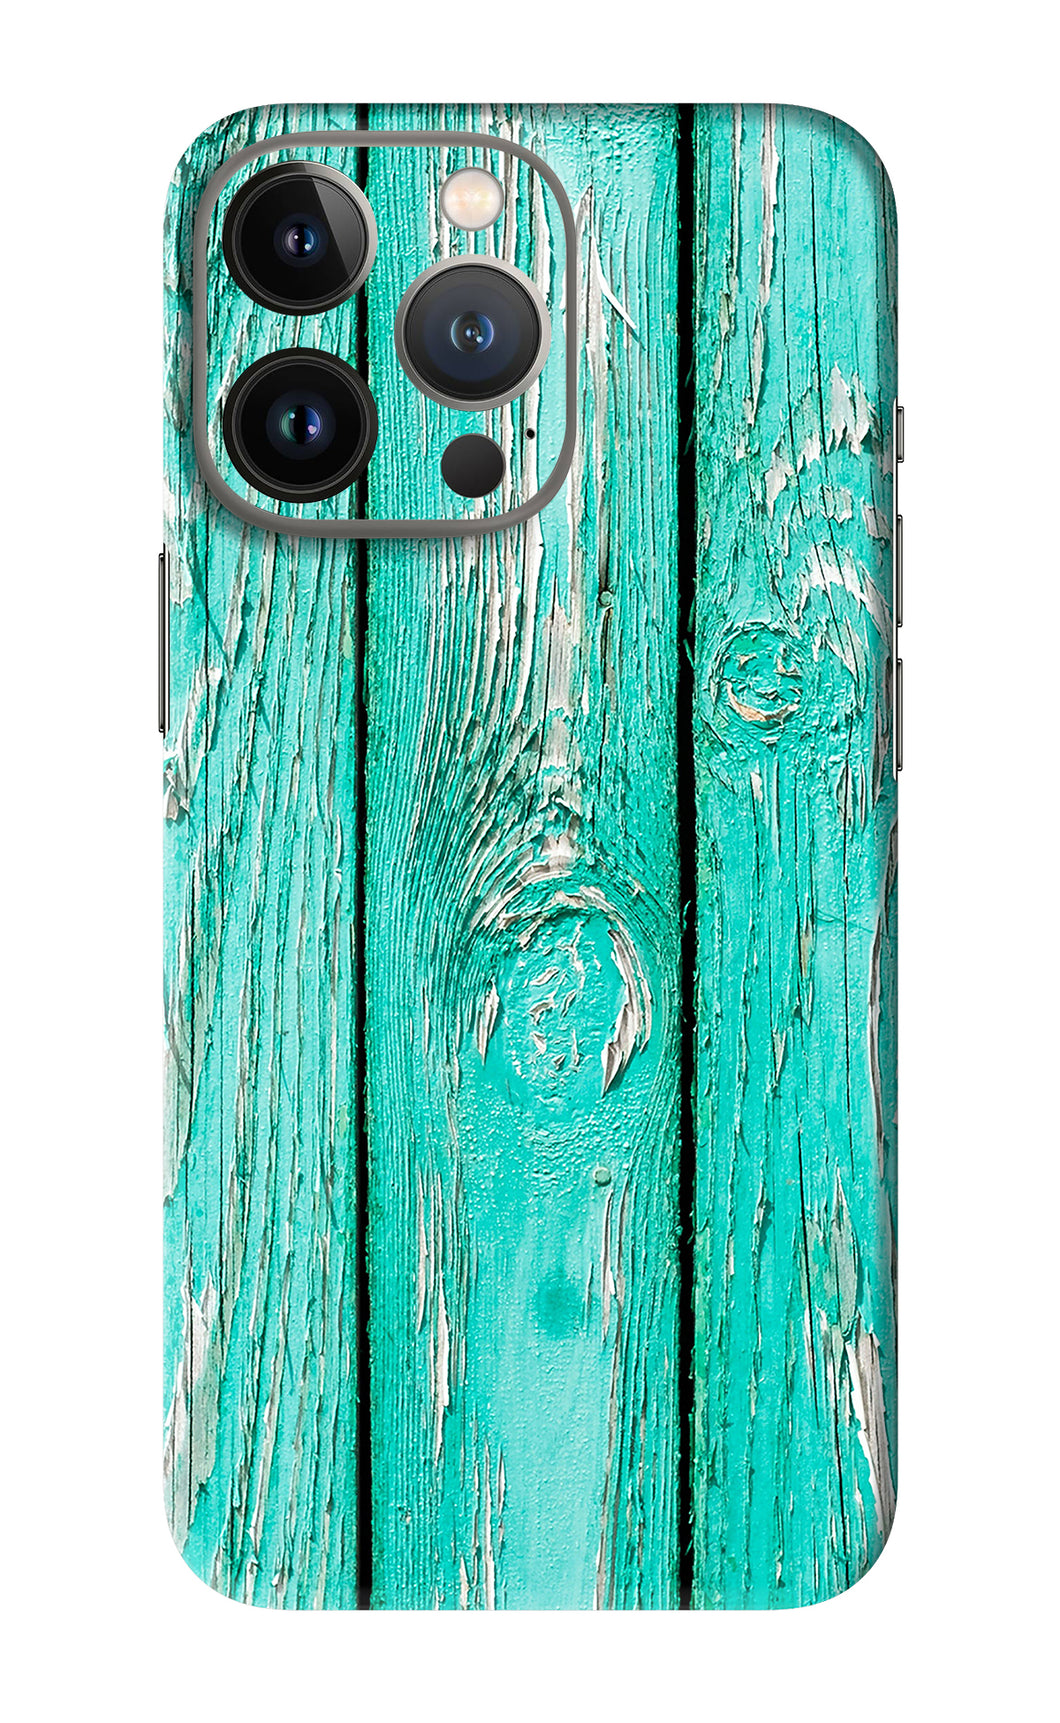 Blue Wood iPhone 13 Pro Max Back Skin Wrap